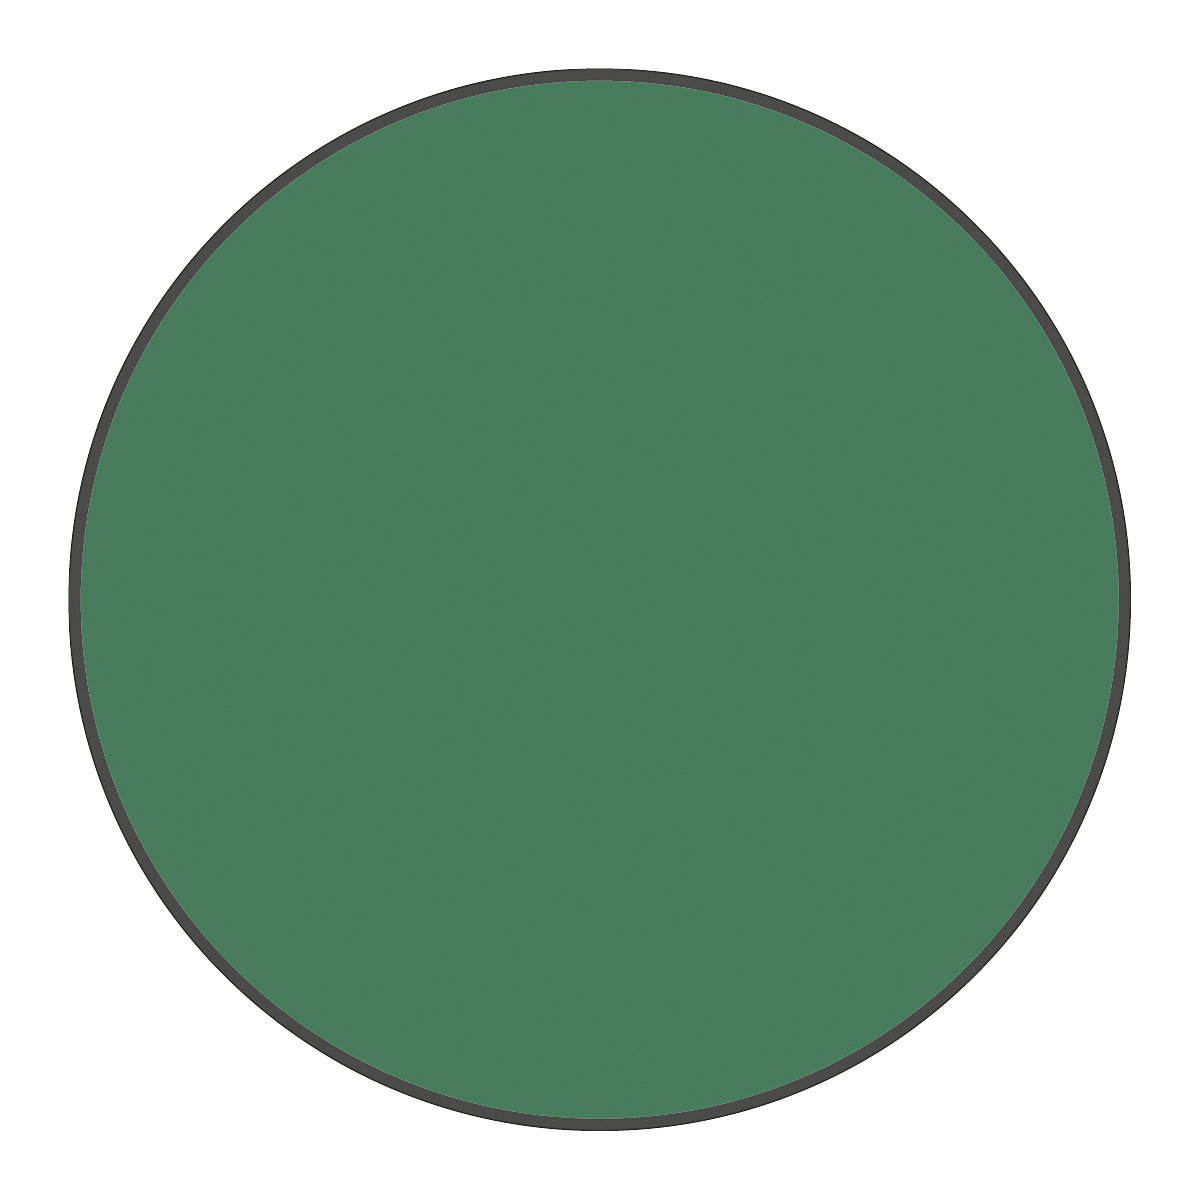 Podlahové značenia z PVC, tvar kruhu, OJ 100 ks, zelená-5